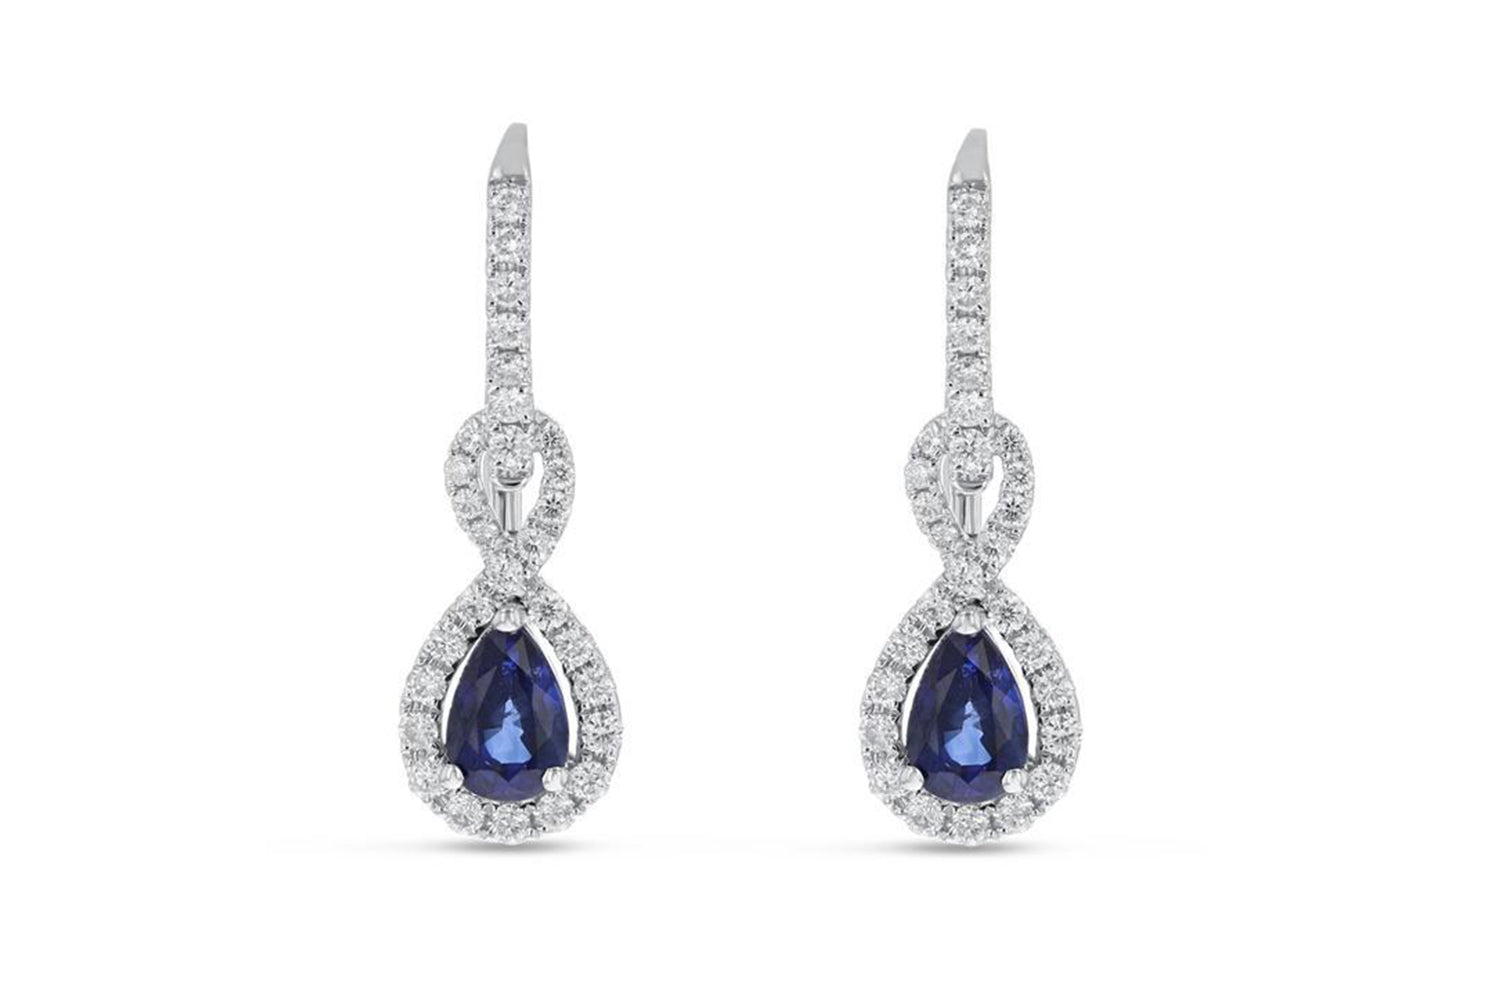 18K White Gold Sapphire & Diamond Earrings, 1.55 Carats